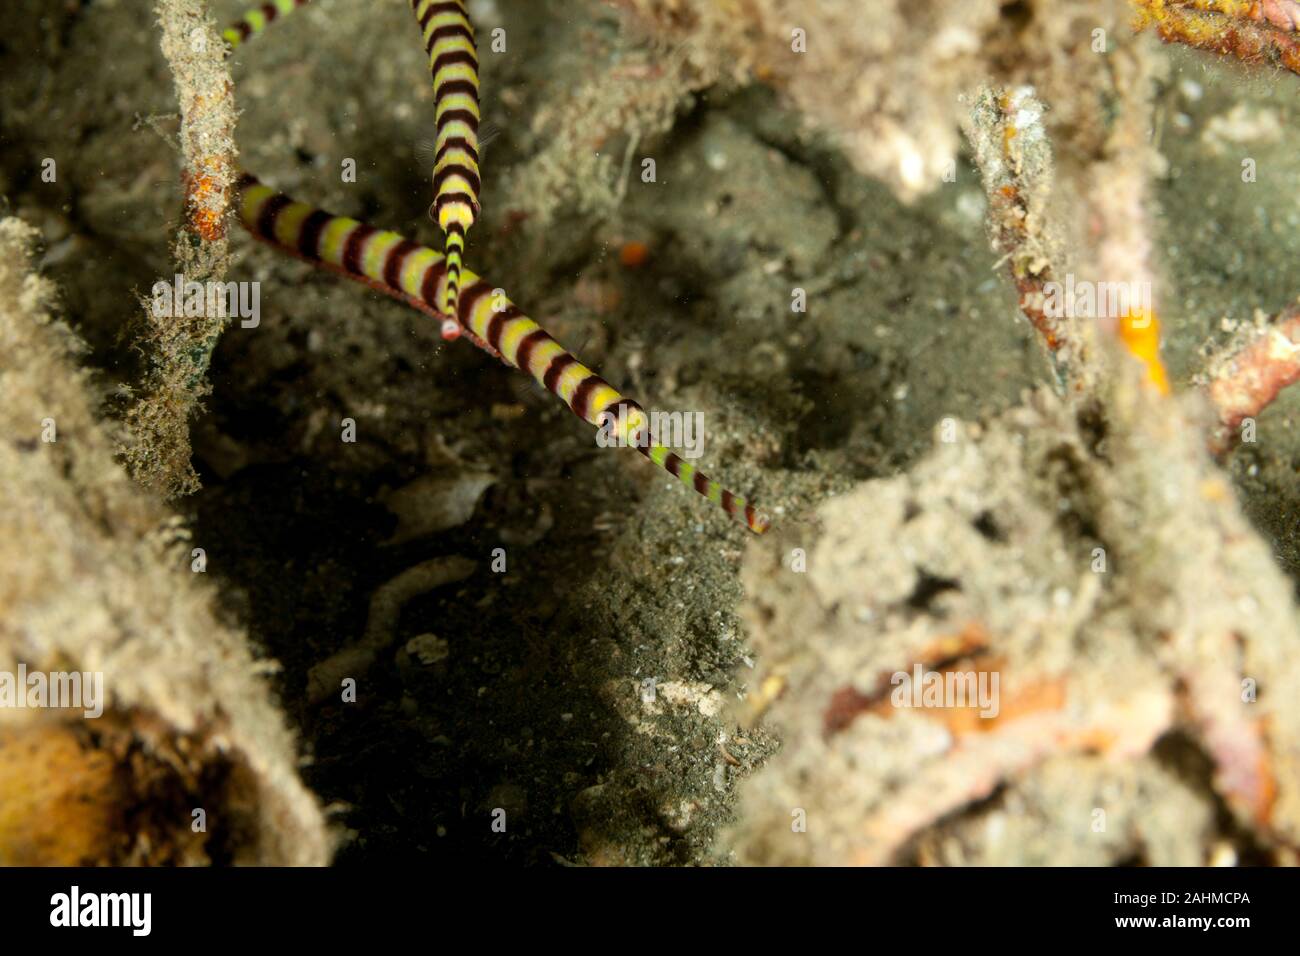 Yellowbanded Pipefish, Dunckerocampus pessuliferus Stock Photo